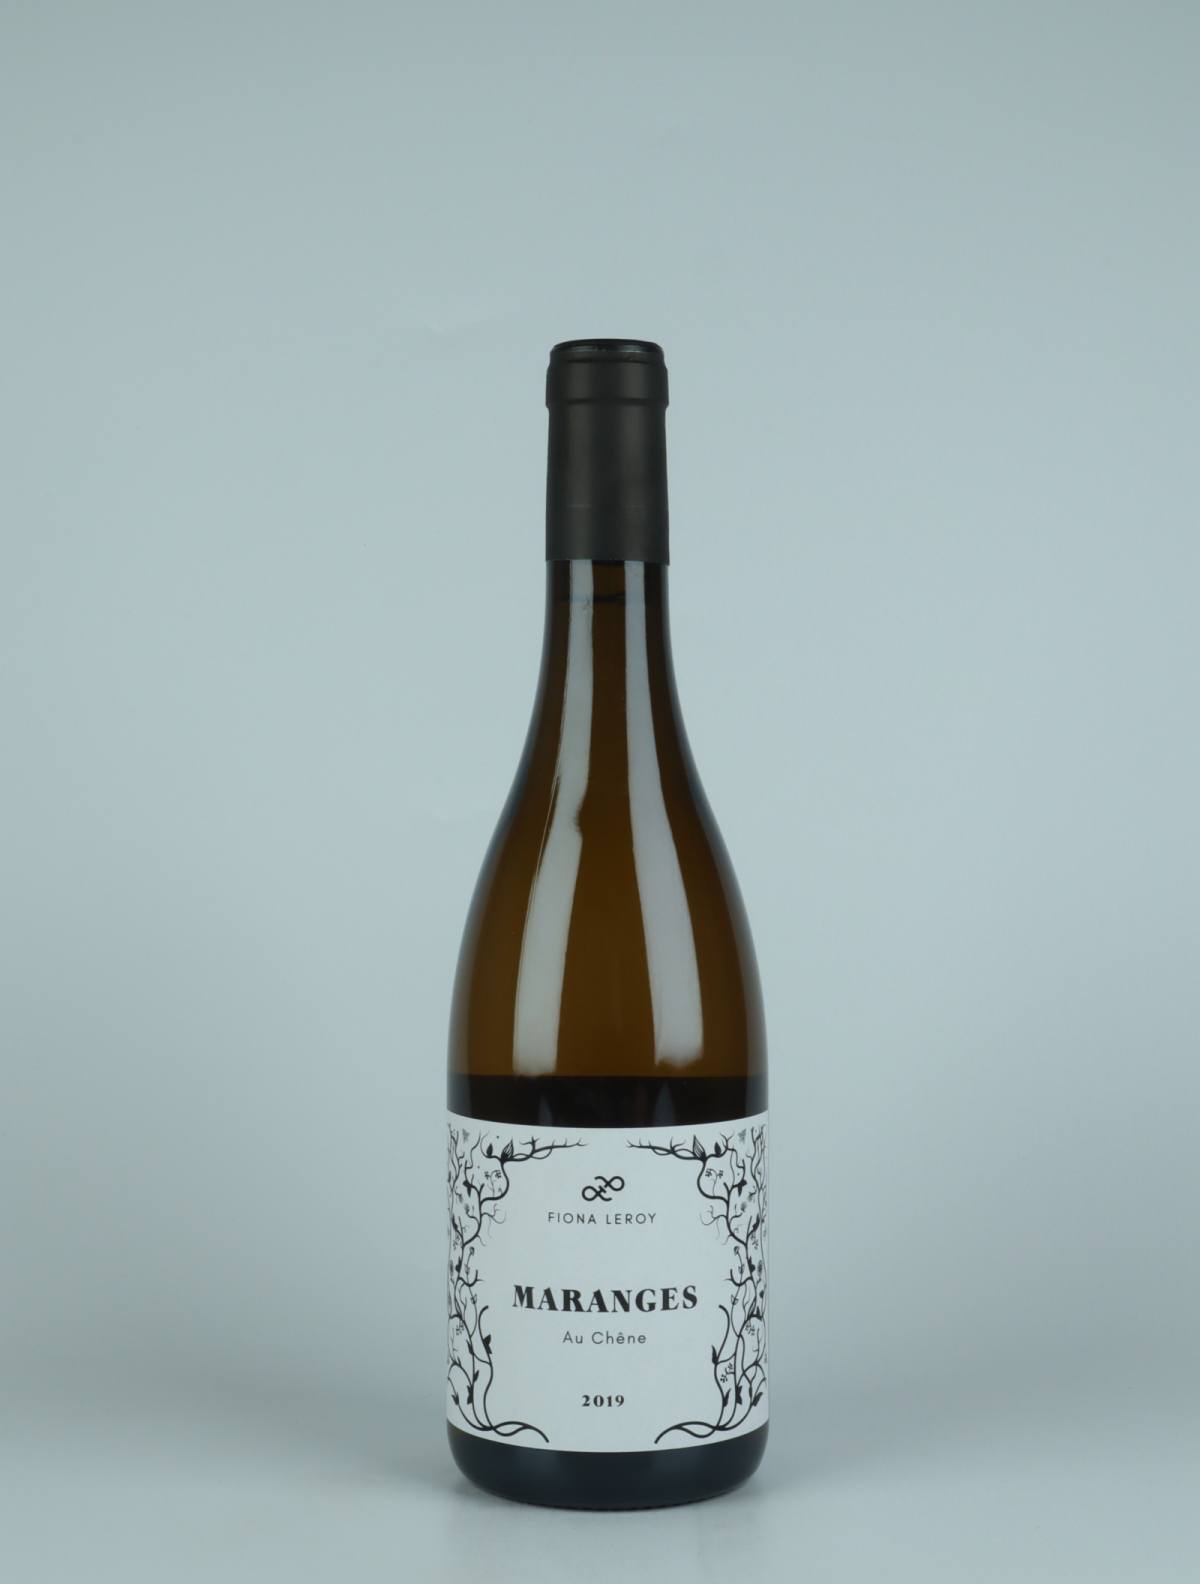 A bottle 2019 Maranges Blanc - Au Chêne White wine from Fiona Leroy, Burgundy in France